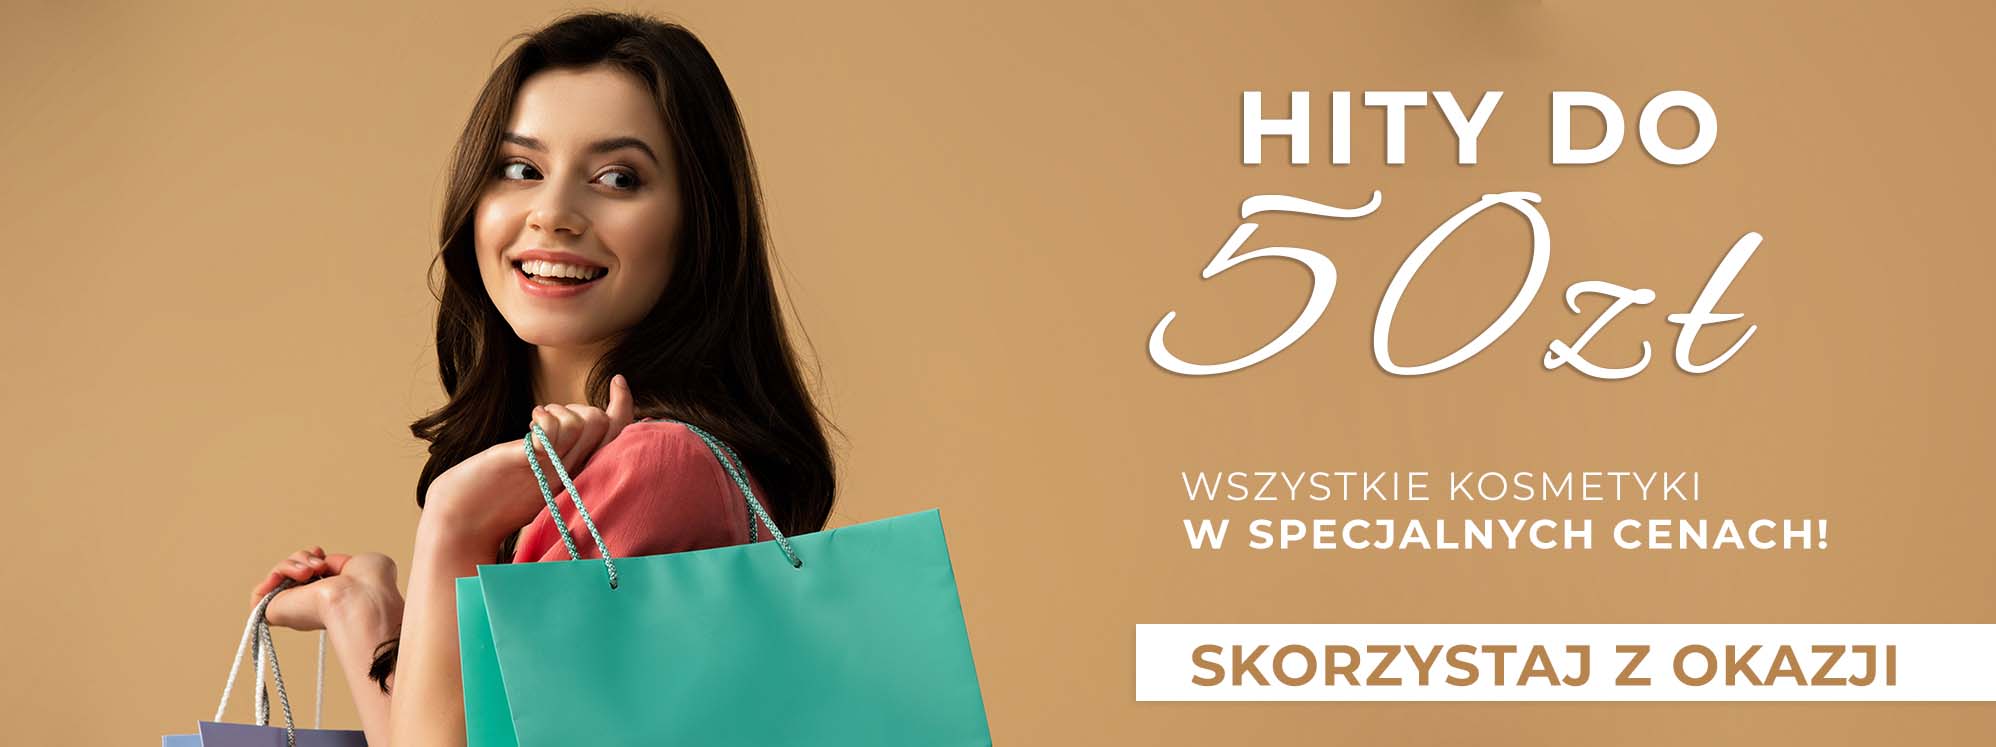 Hity do 50zł fashionup.pl